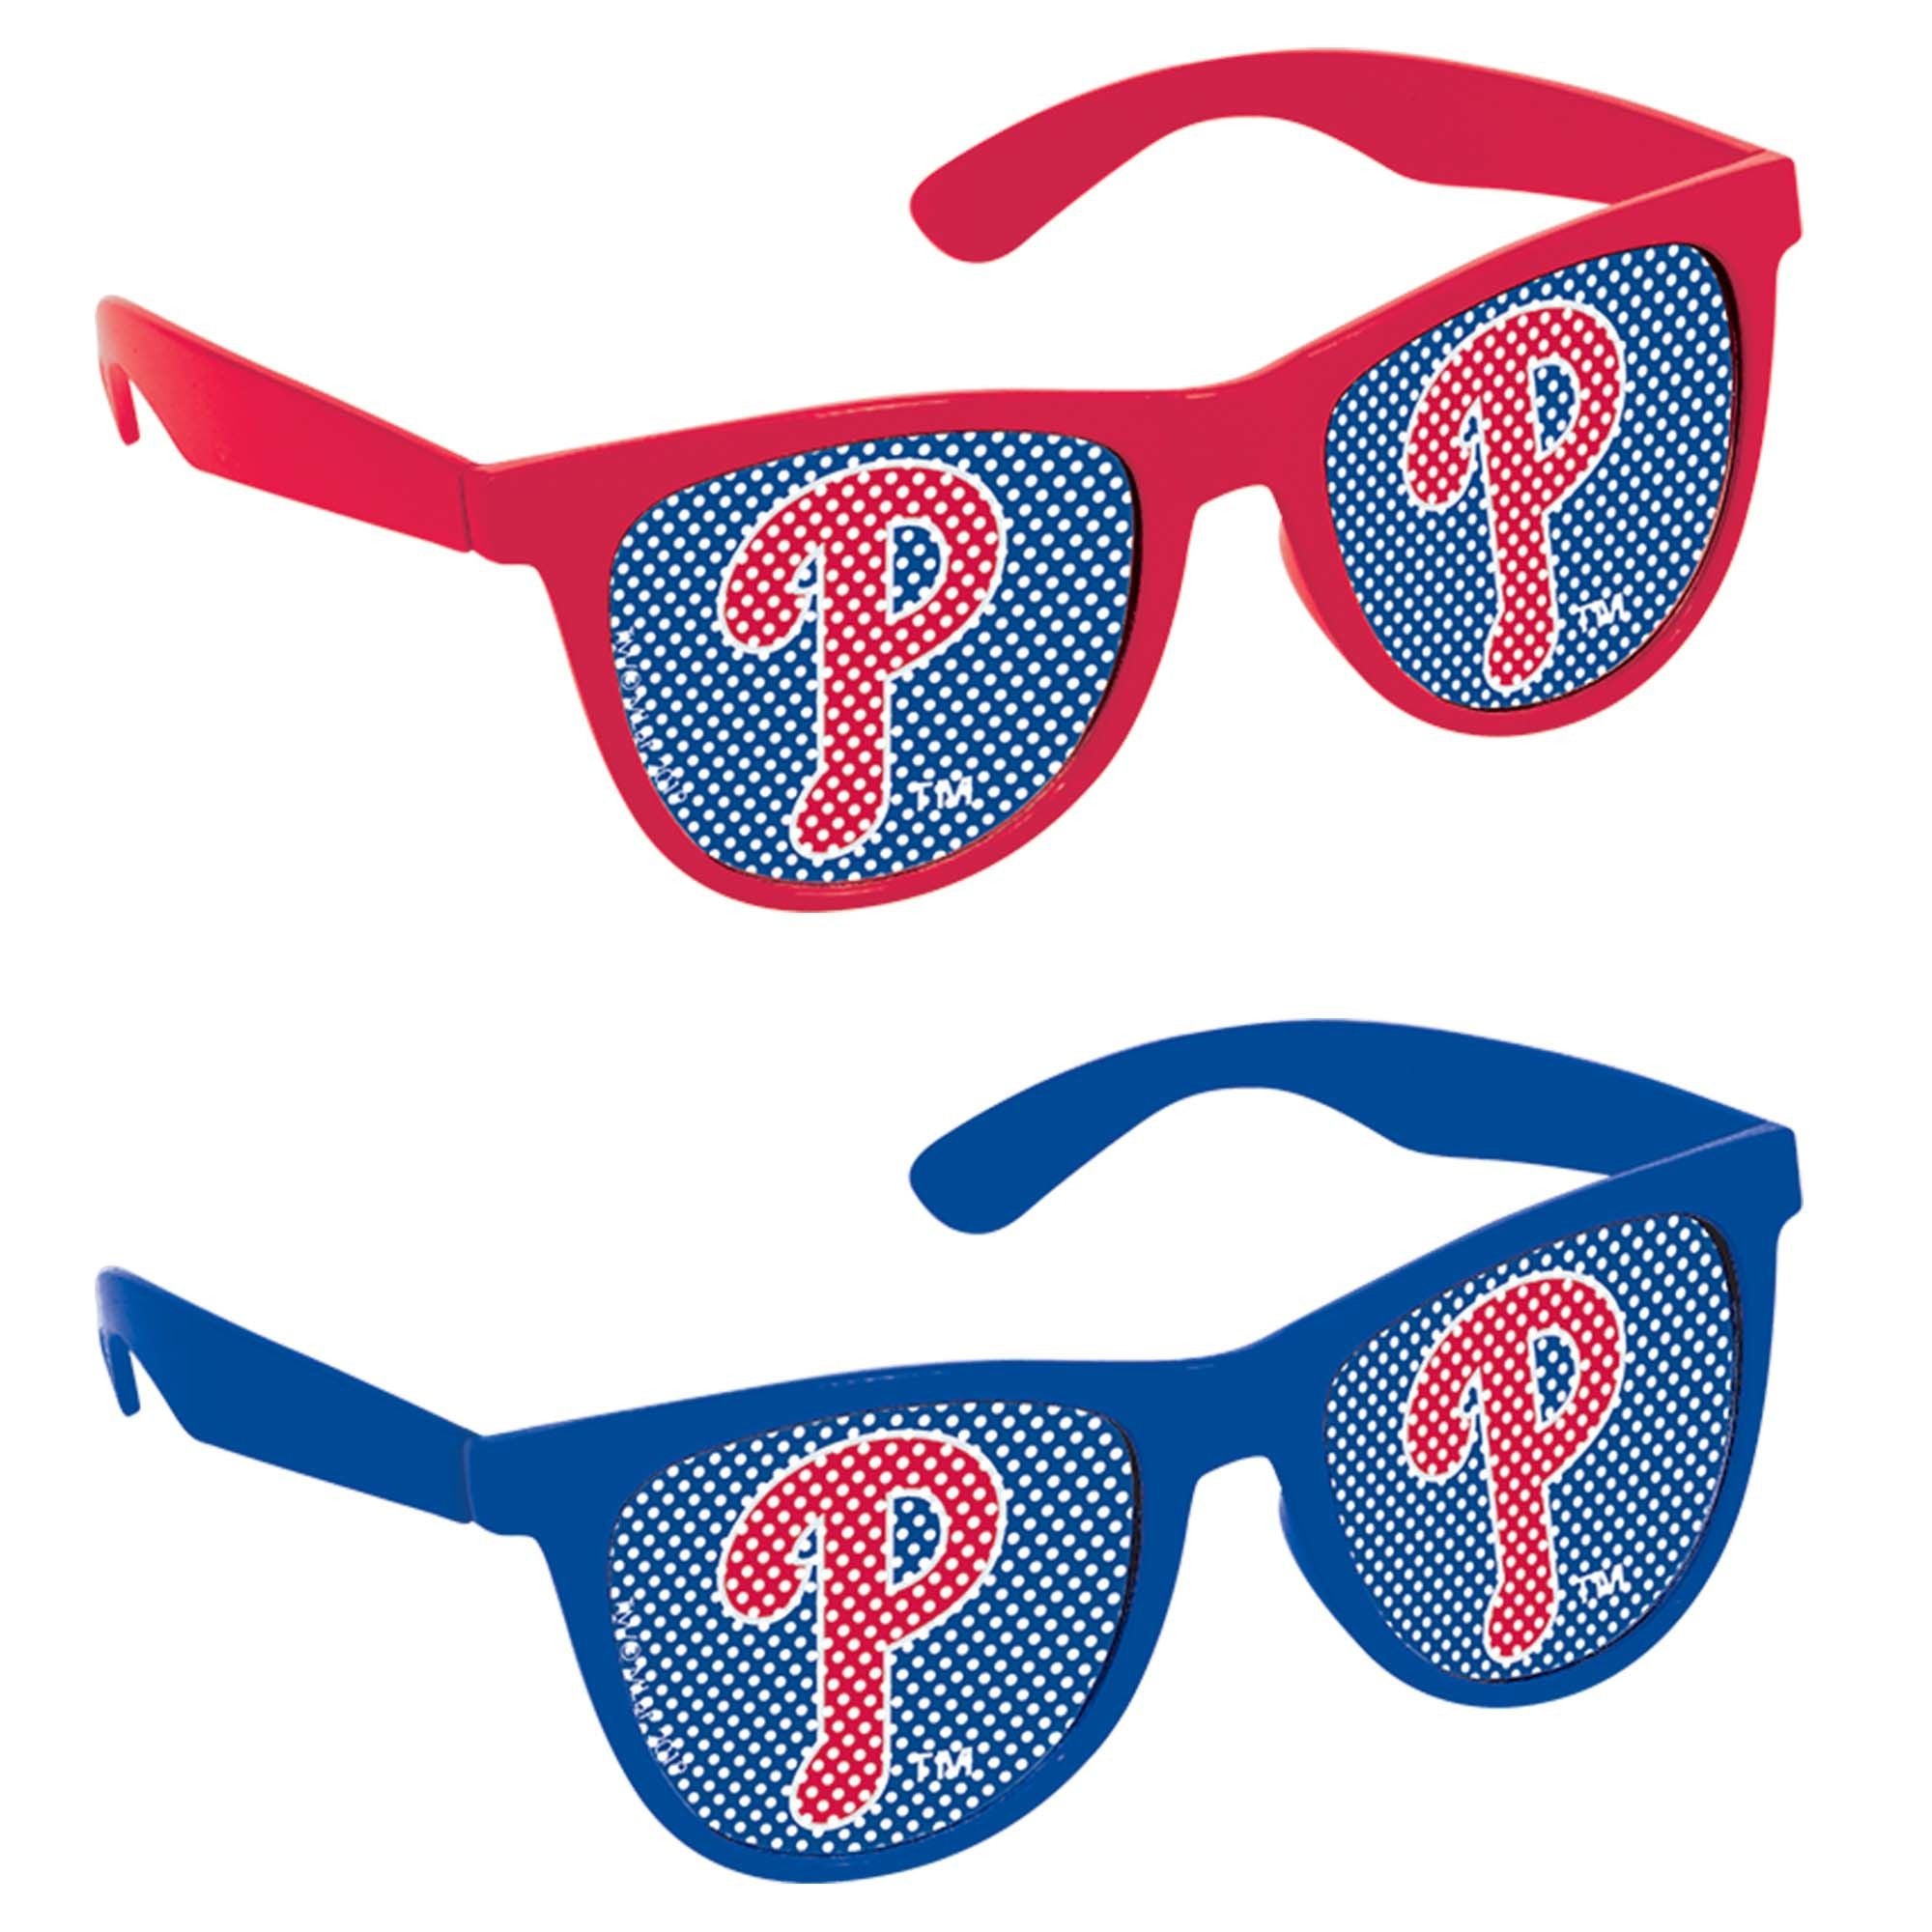 Philadelphia Phillies Printed Glasses